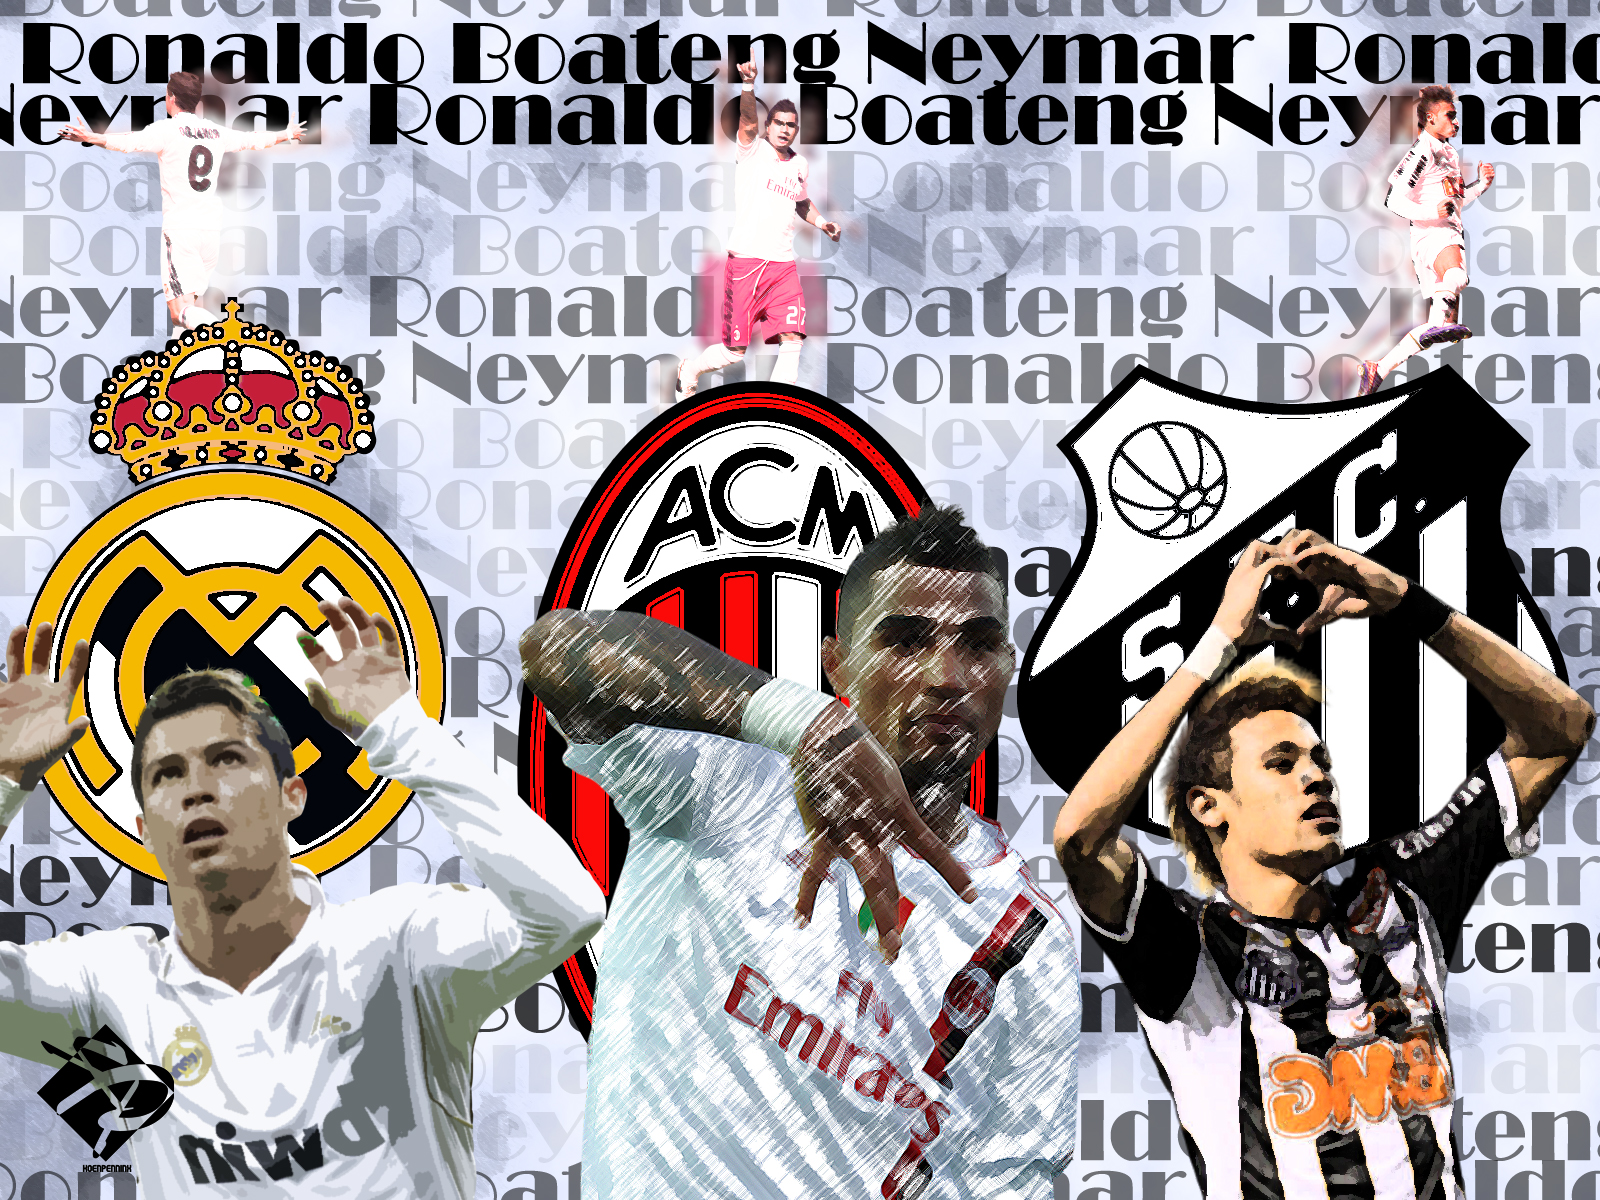 Cristiano Ronaldo Boateng Neymar Wallpaper by kpenx on DeviantArt